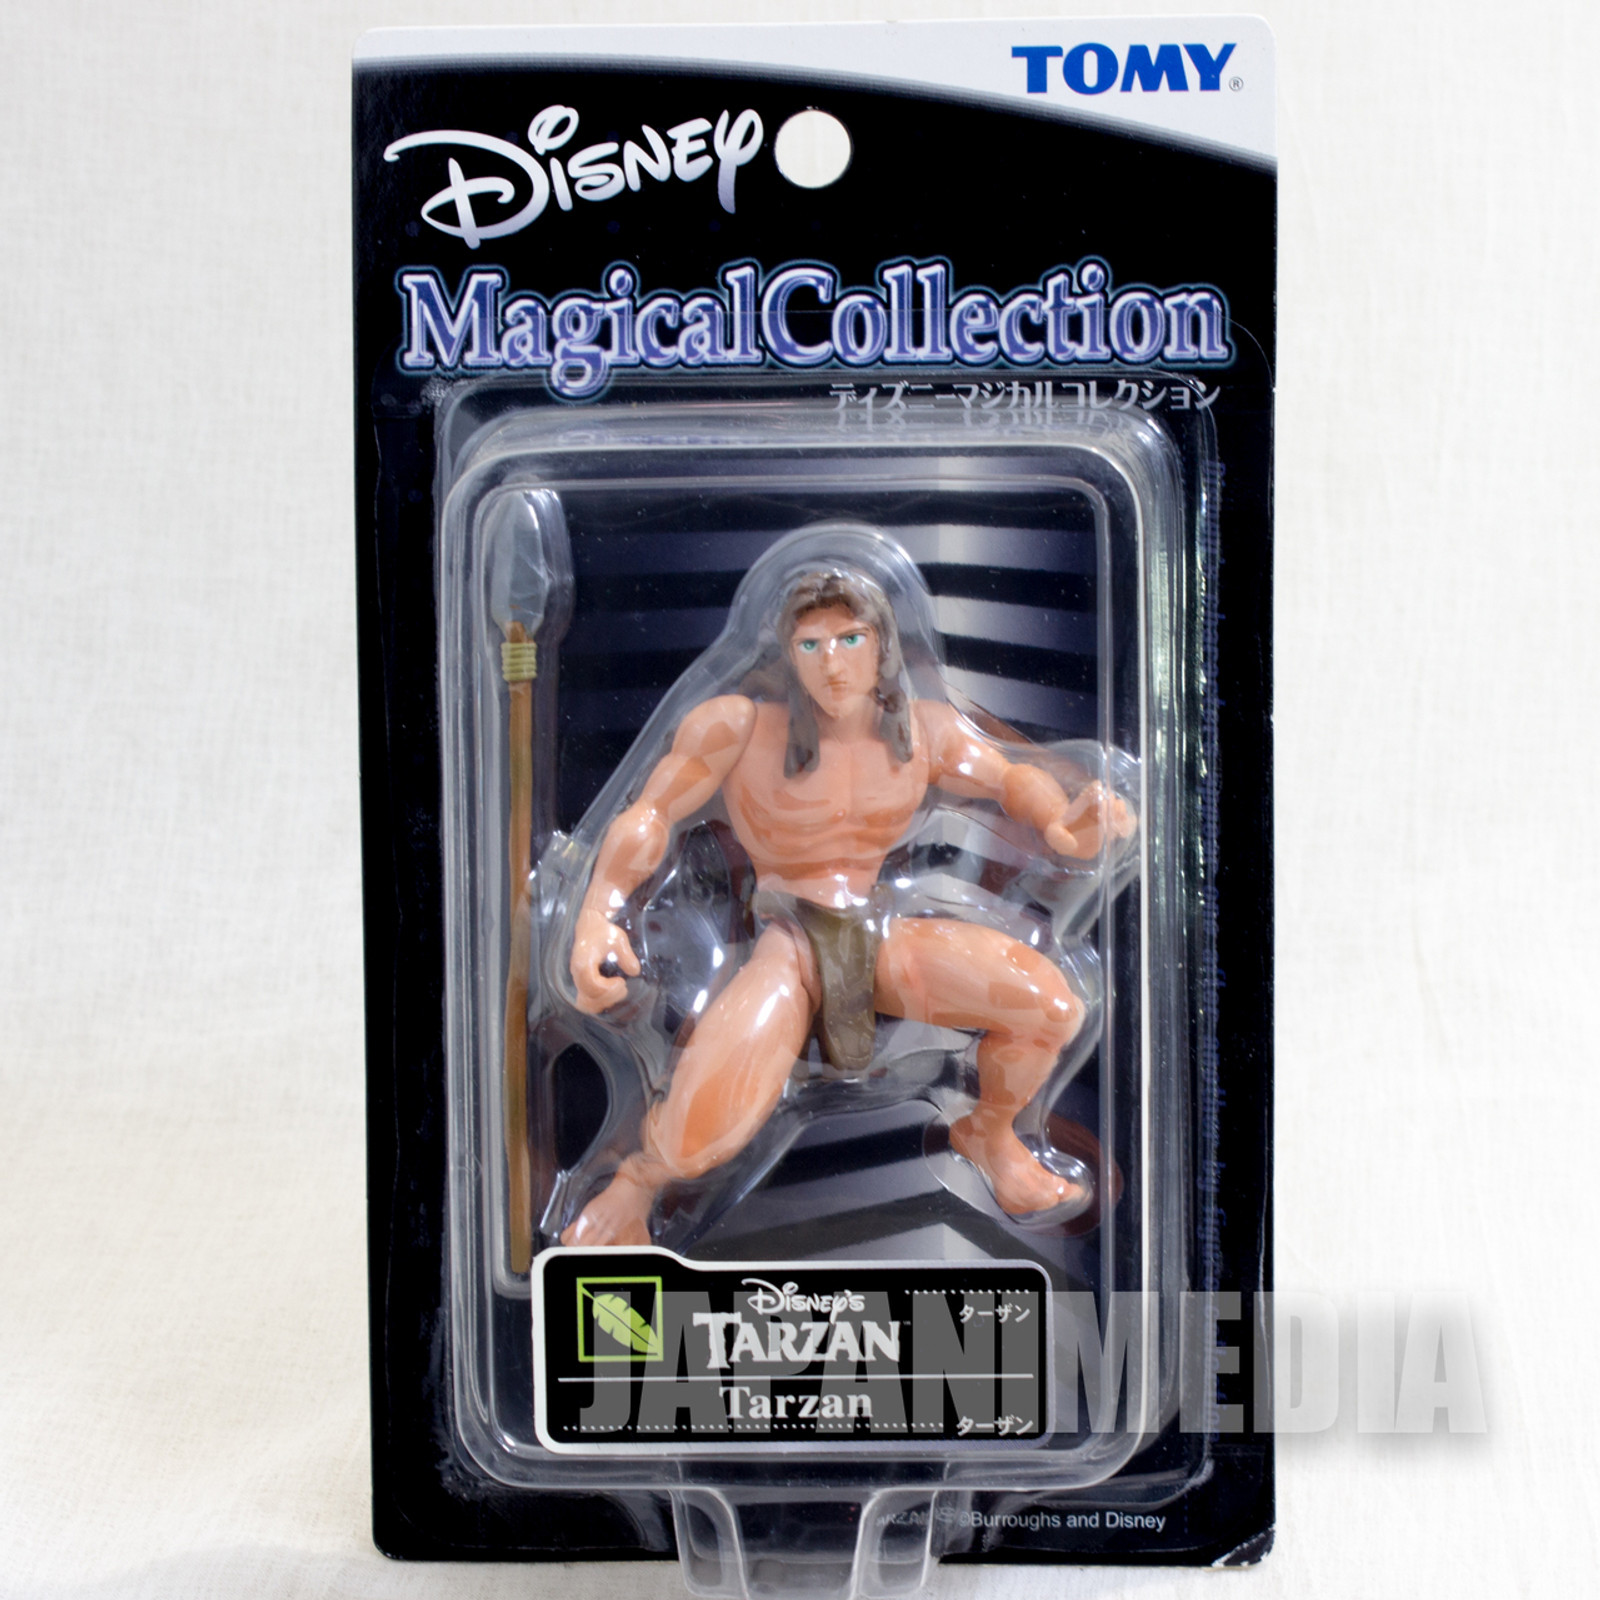 Tarzan Tarzan Disney Magical Collection Figure 085 Tomy